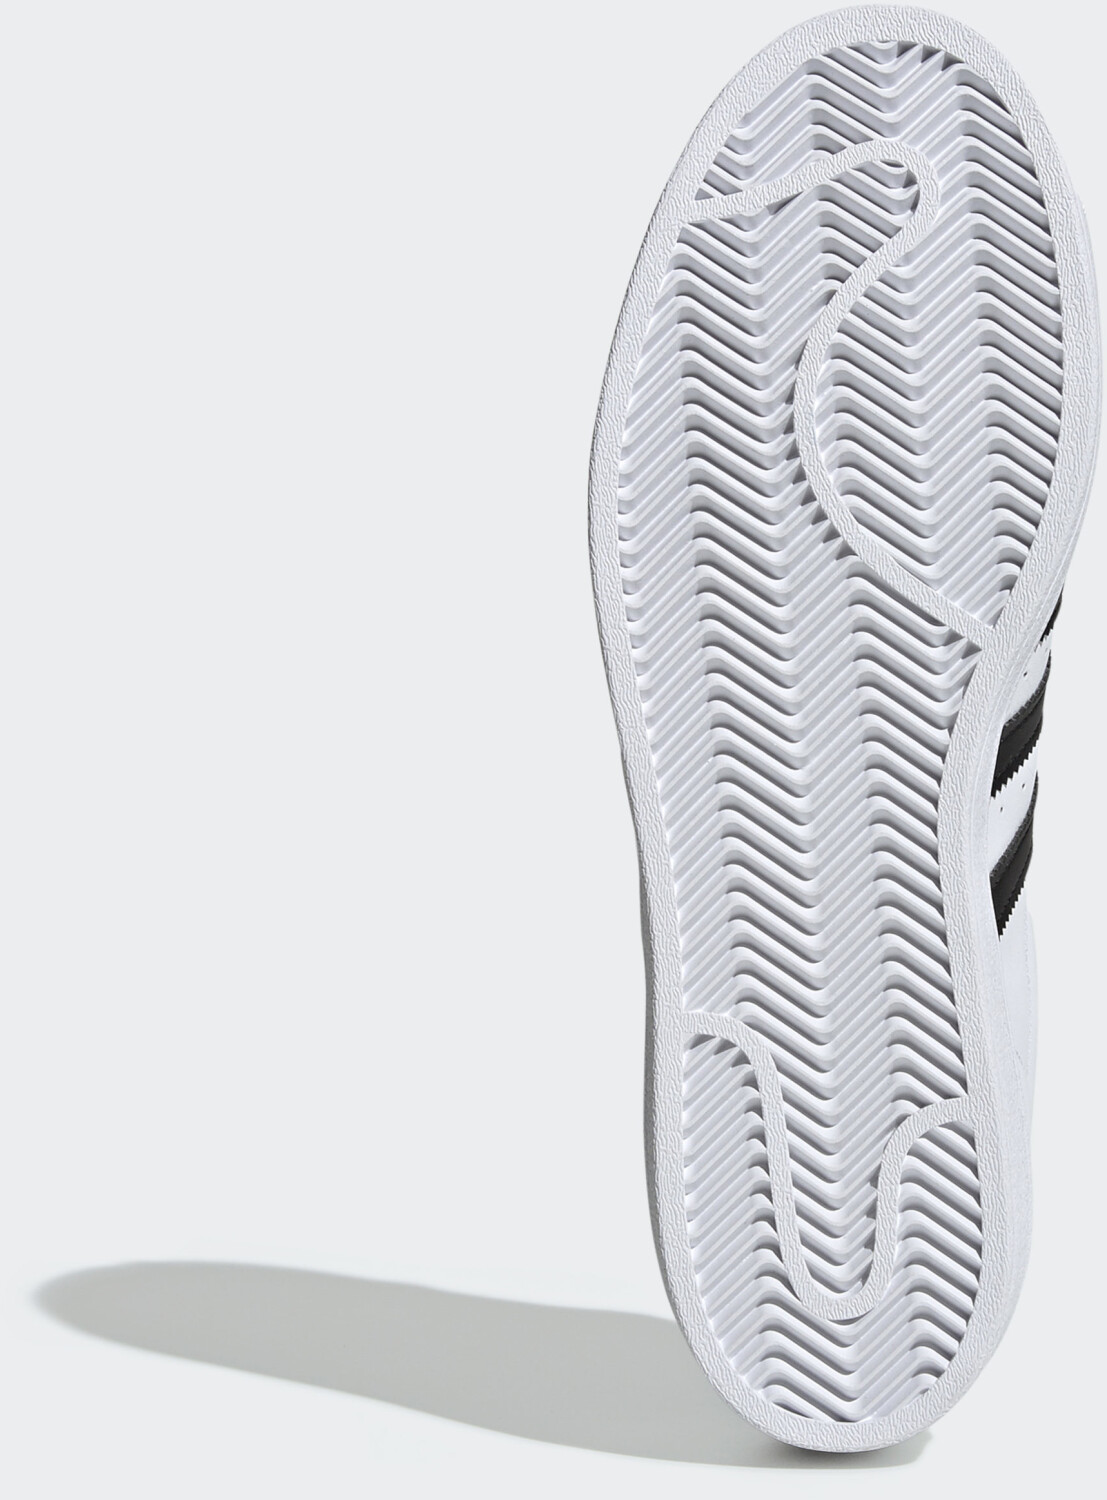 adidas Originals Superstar White Black Gold Men Women Unisex Classic Shoe  EG4958